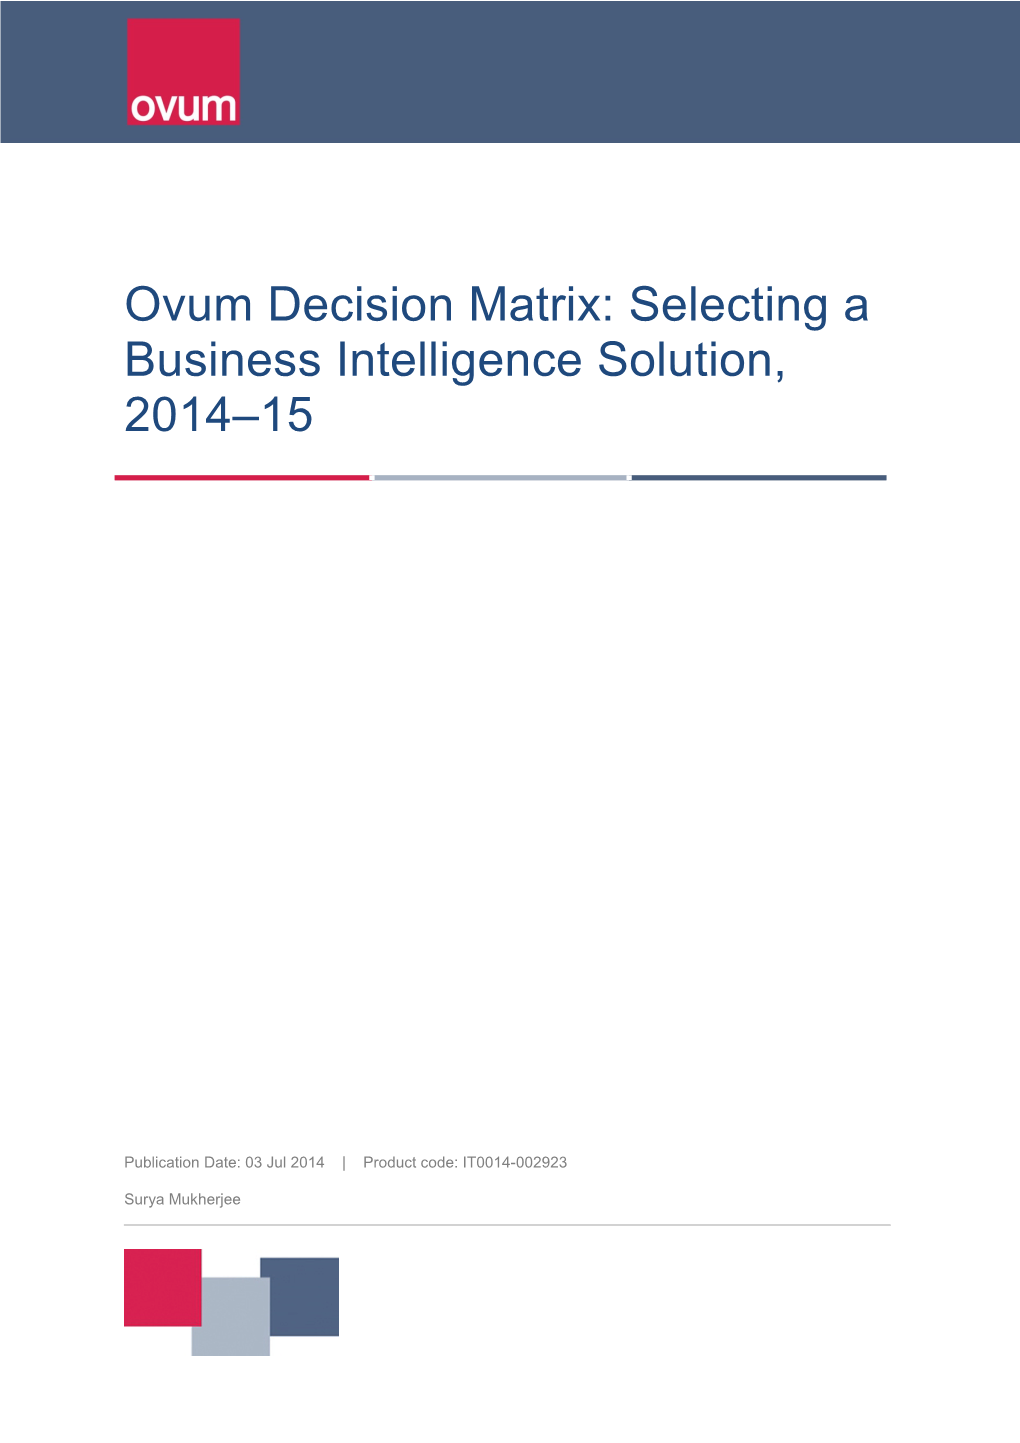 Ovum Decision Matrix: Selecting a Business Intelligence Solution, 2014–15